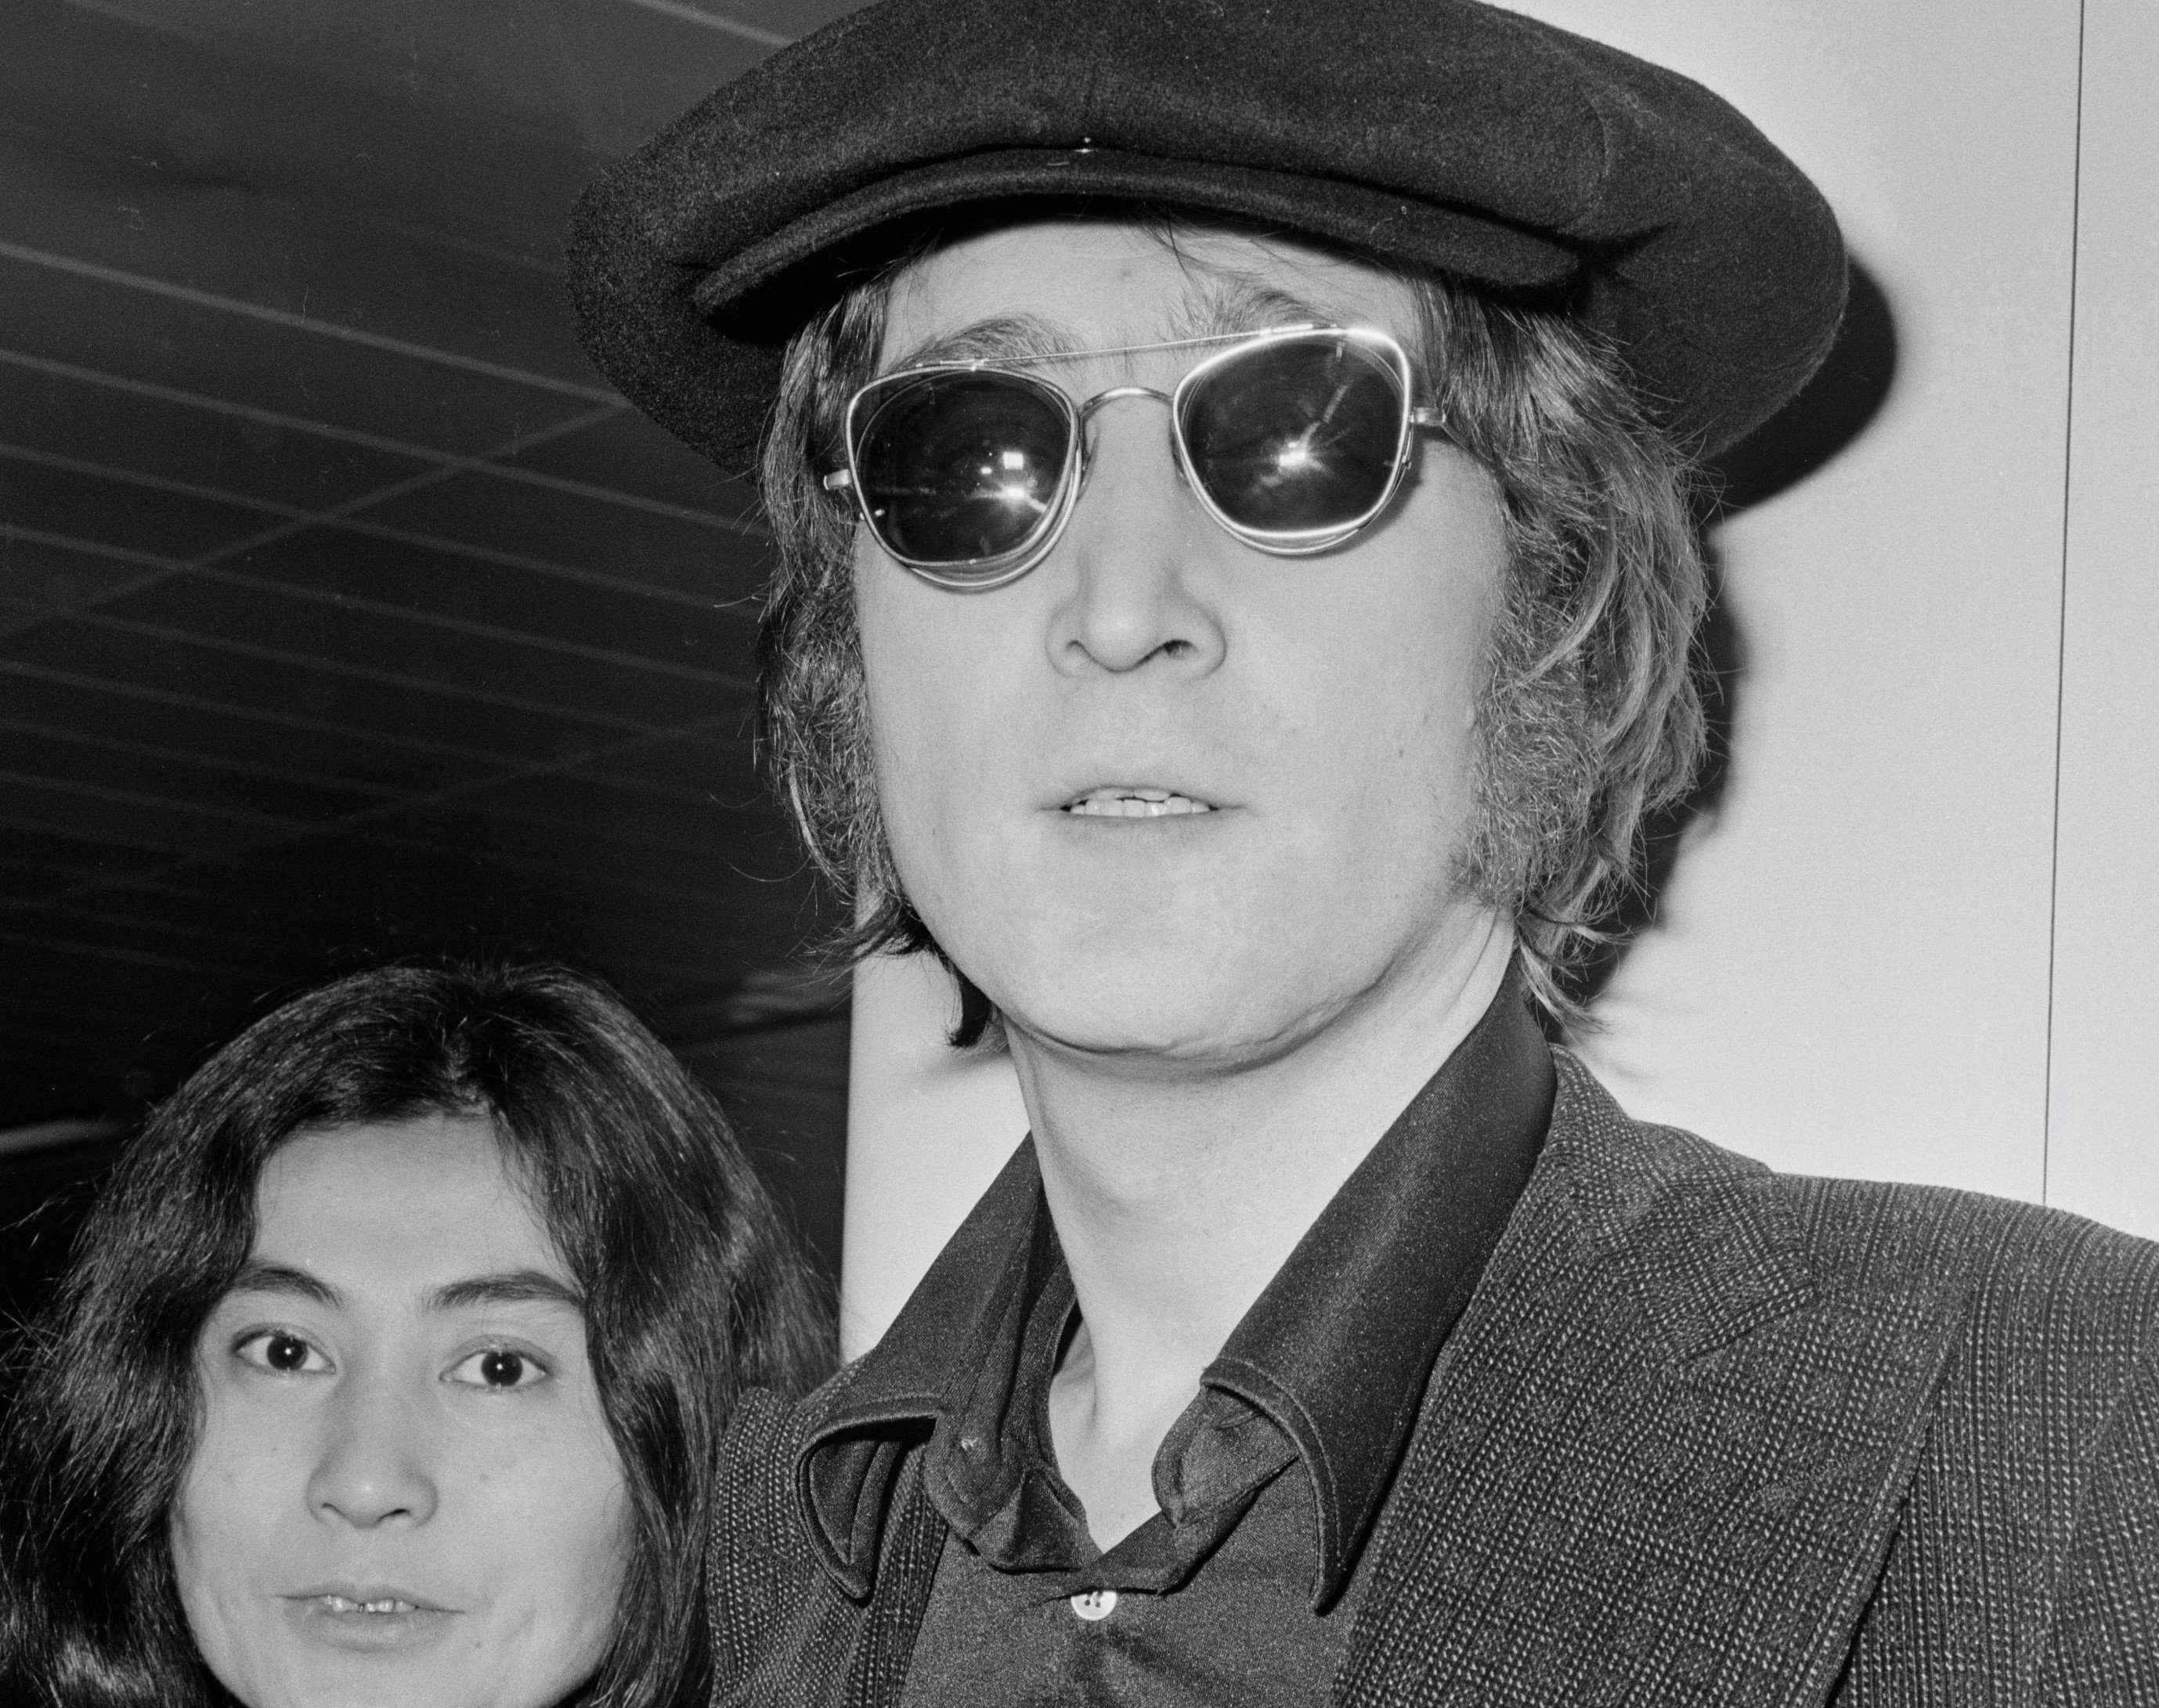 Yoko Ono and John Lennon in black-and-white